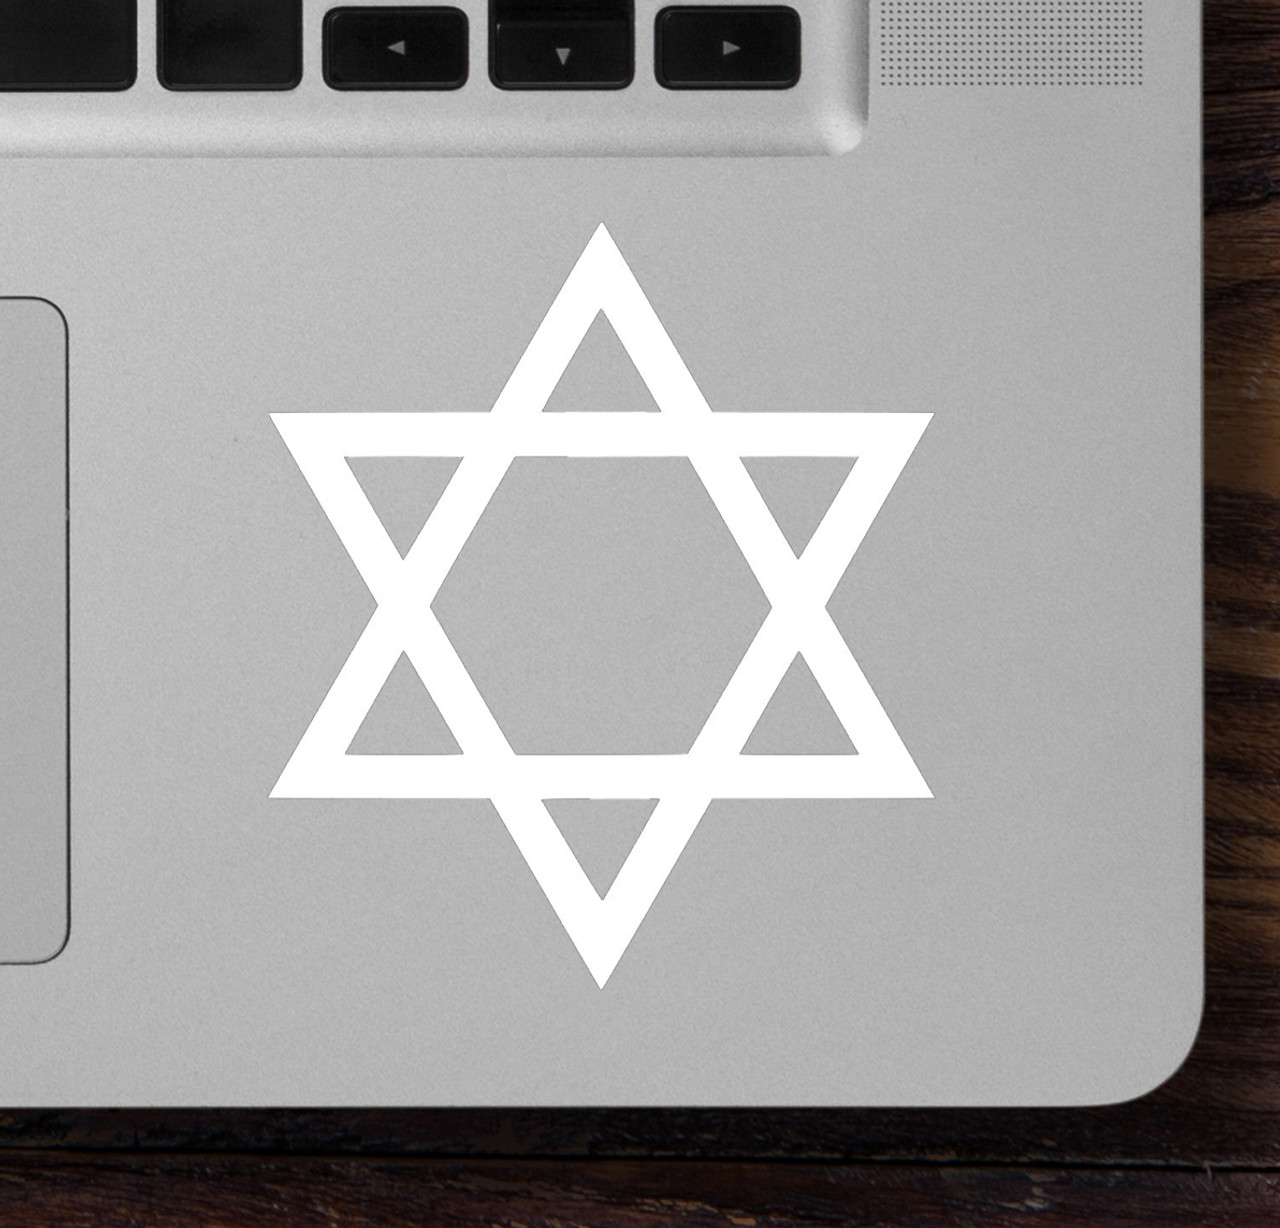 Two (2) STAR OF DAVID 2.5" x 3" Vinyl Decal Stickers - Jewish Hebrew Judaism